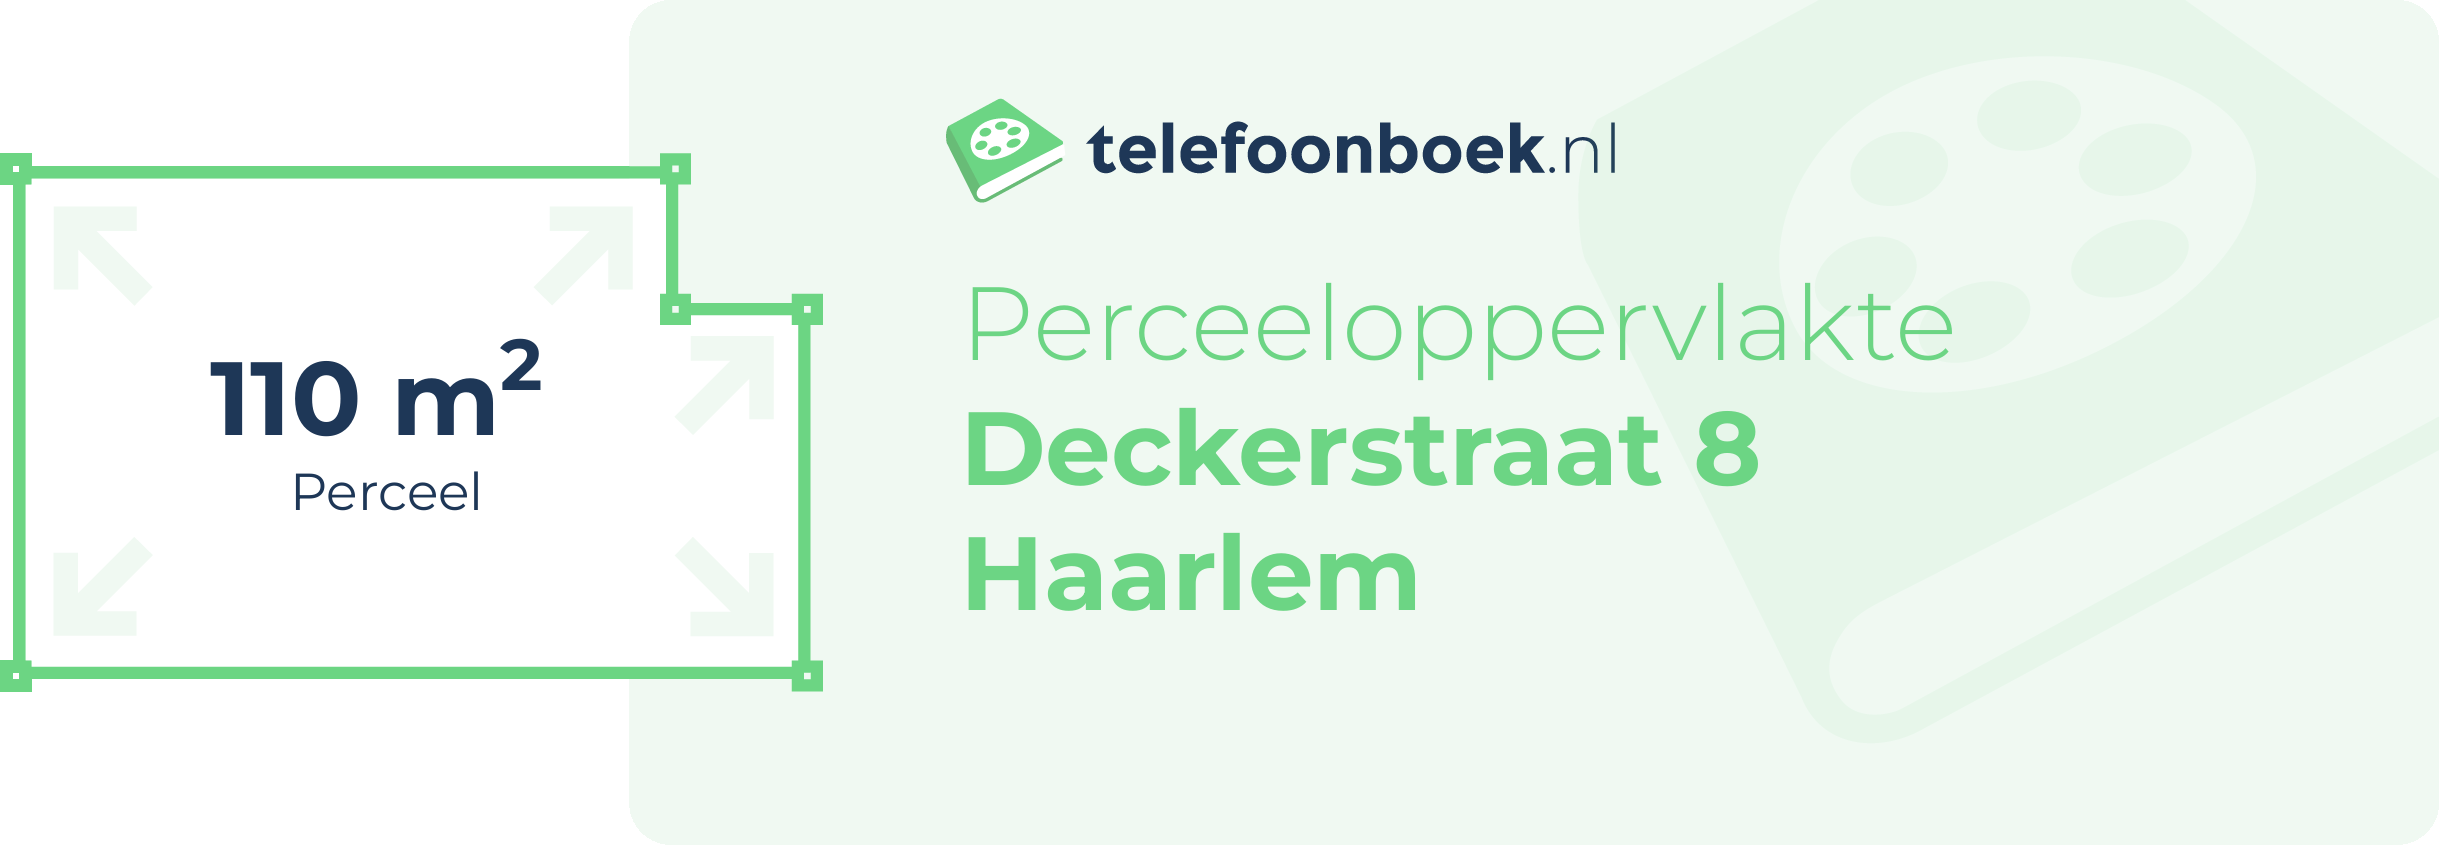 Perceeloppervlakte Deckerstraat 8 Haarlem